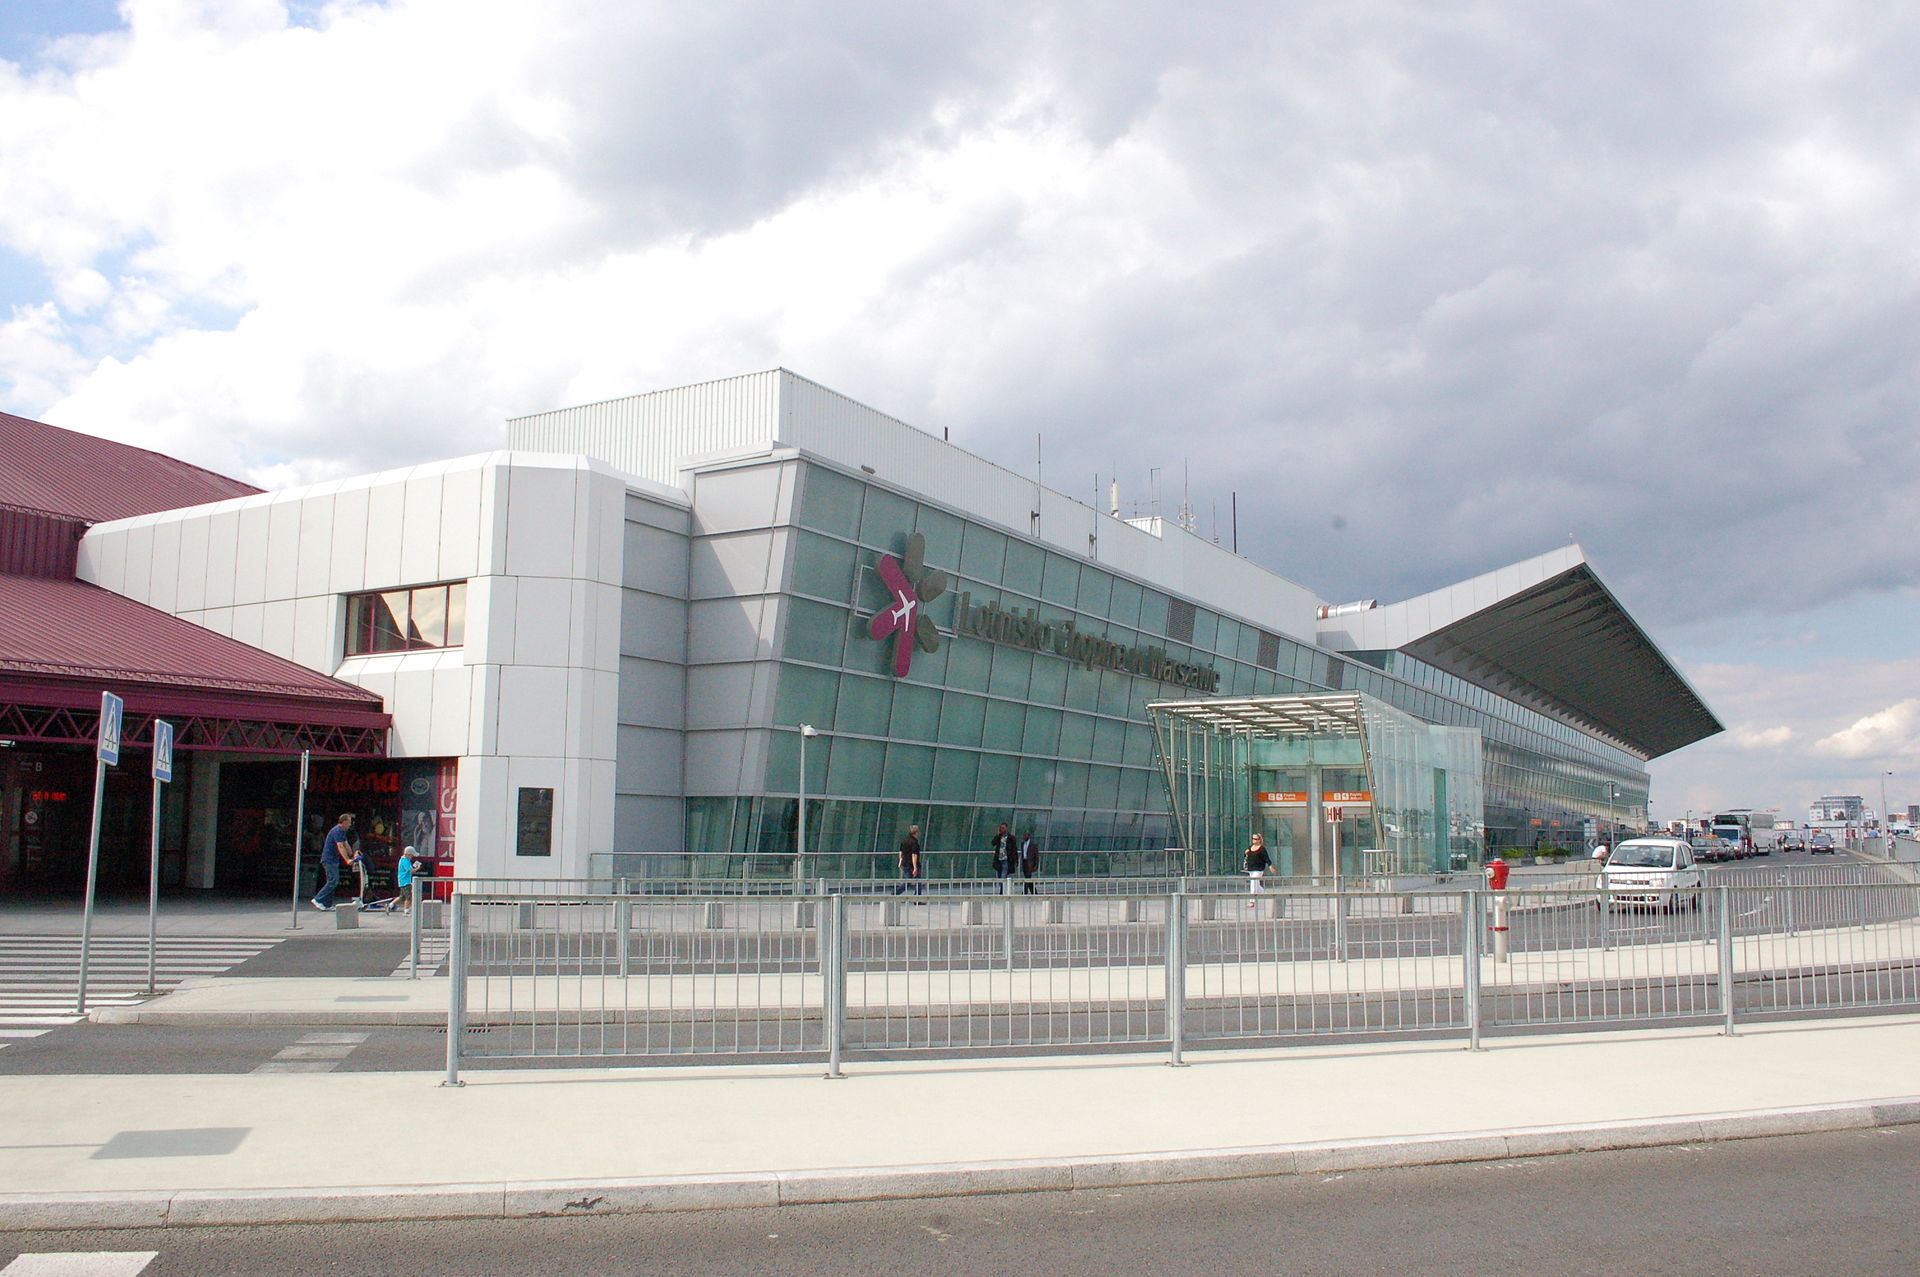 Lotnisko Chopina, Terminal A. Fot. Wistula / Wikipedia